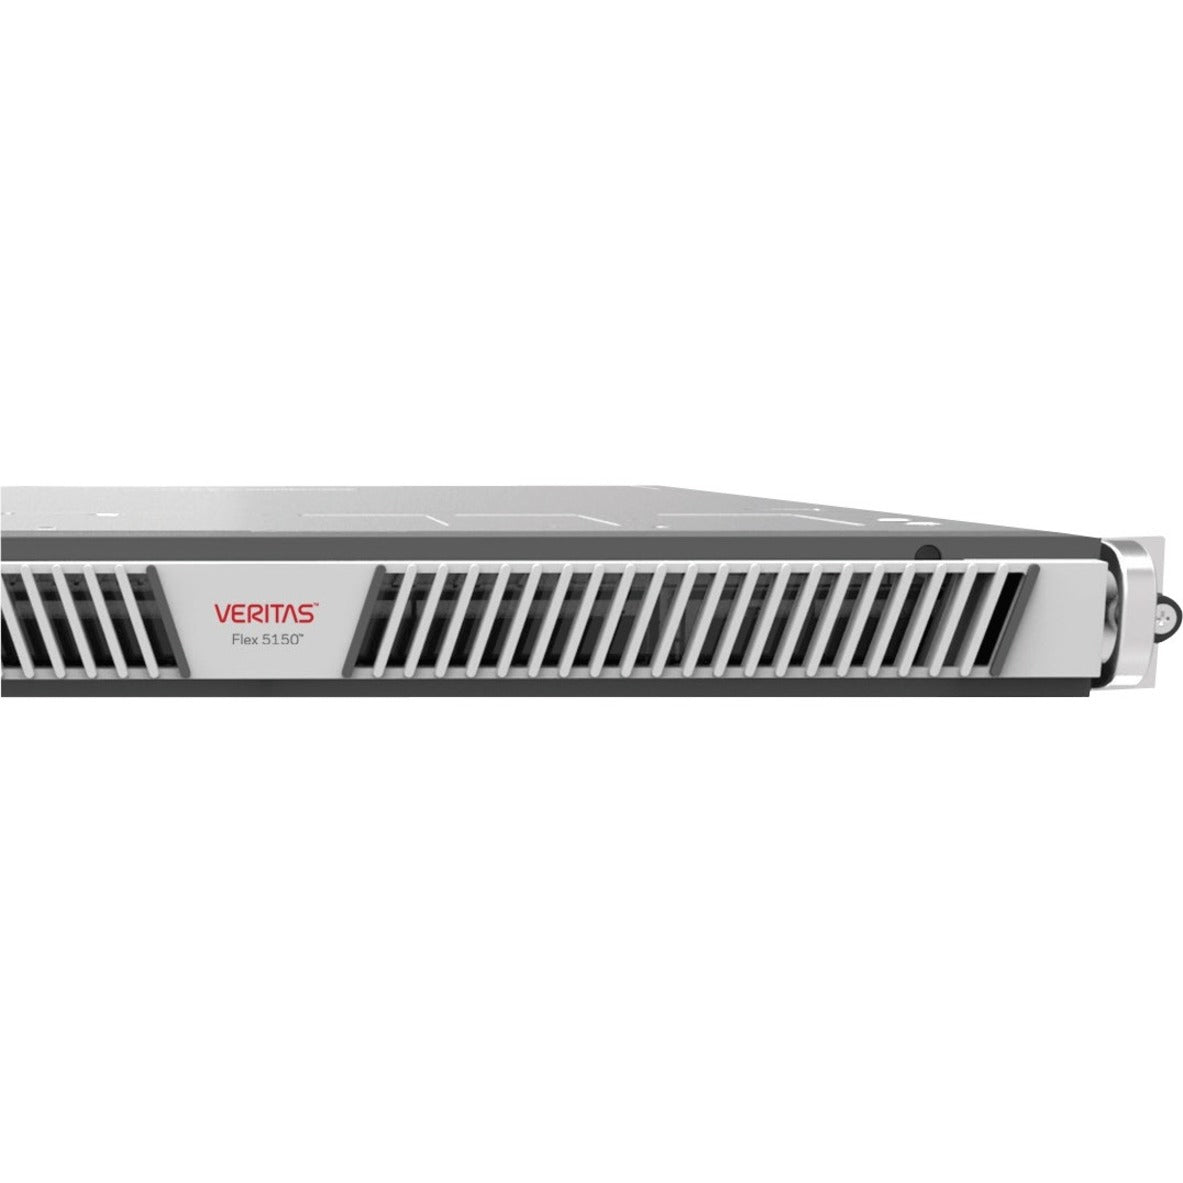 Veritas 26114-M0010 Flex System 5150 NAS Storage System, 15TB Total Hard Drive Capacity Installed, 12Gb/s SAS Controller, 8 Network (RJ-45) Ports